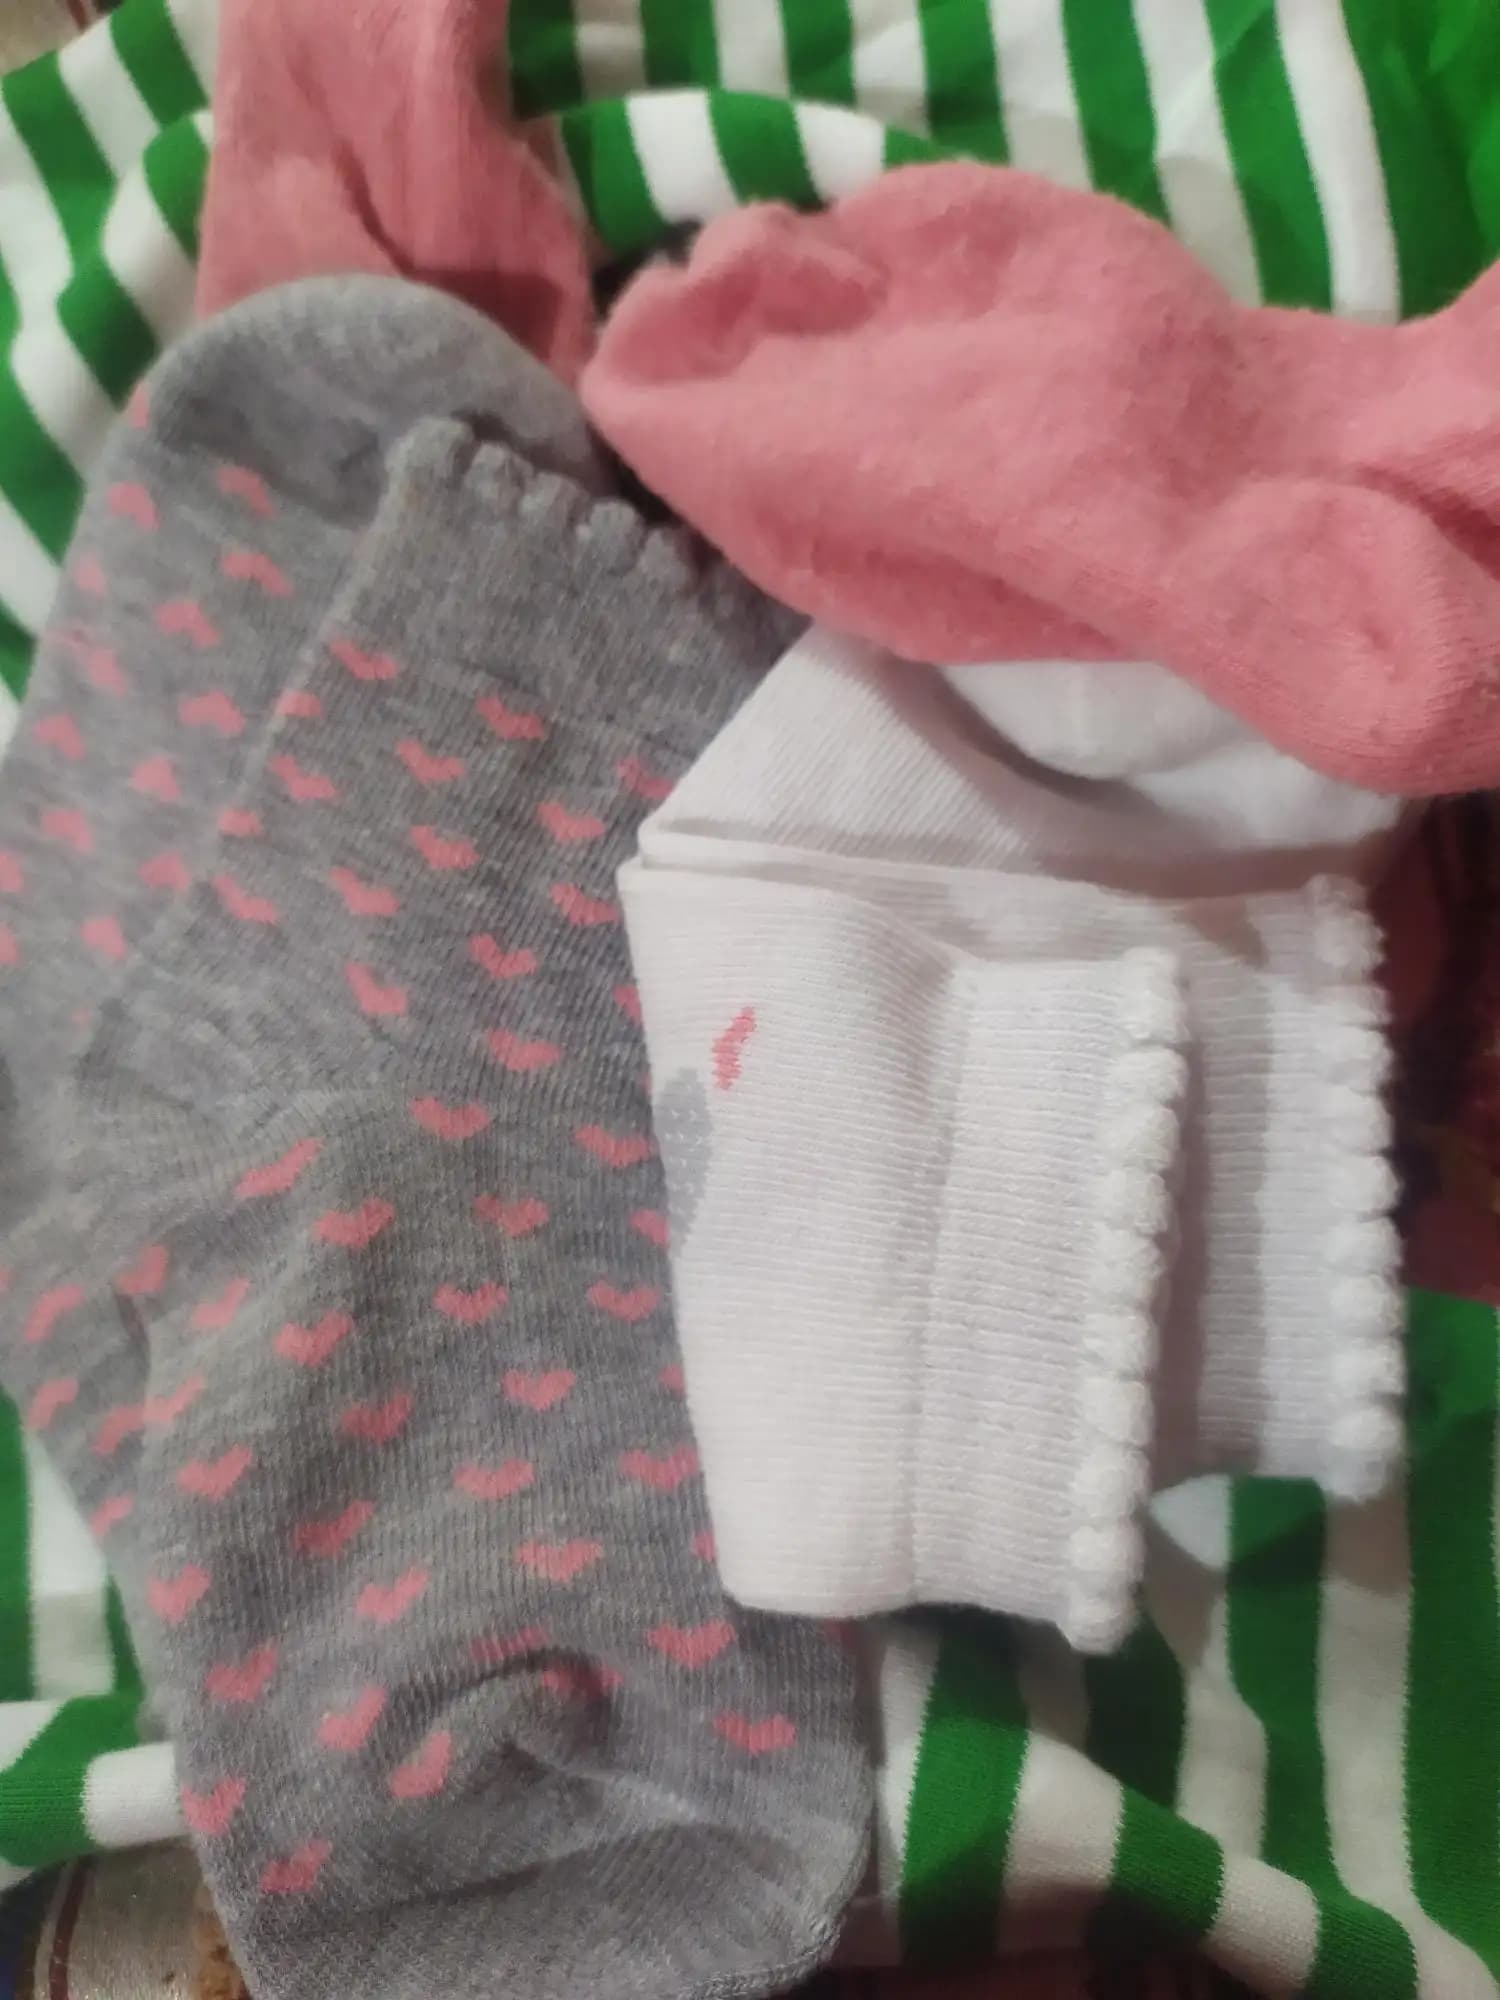 Baby Socks 12-24 Months | Elasticated & Antibacterial | Breathable, Shrinkable, Sweat & Wear Resistant | Unisex Grey Striped & Solid | Pack of 3